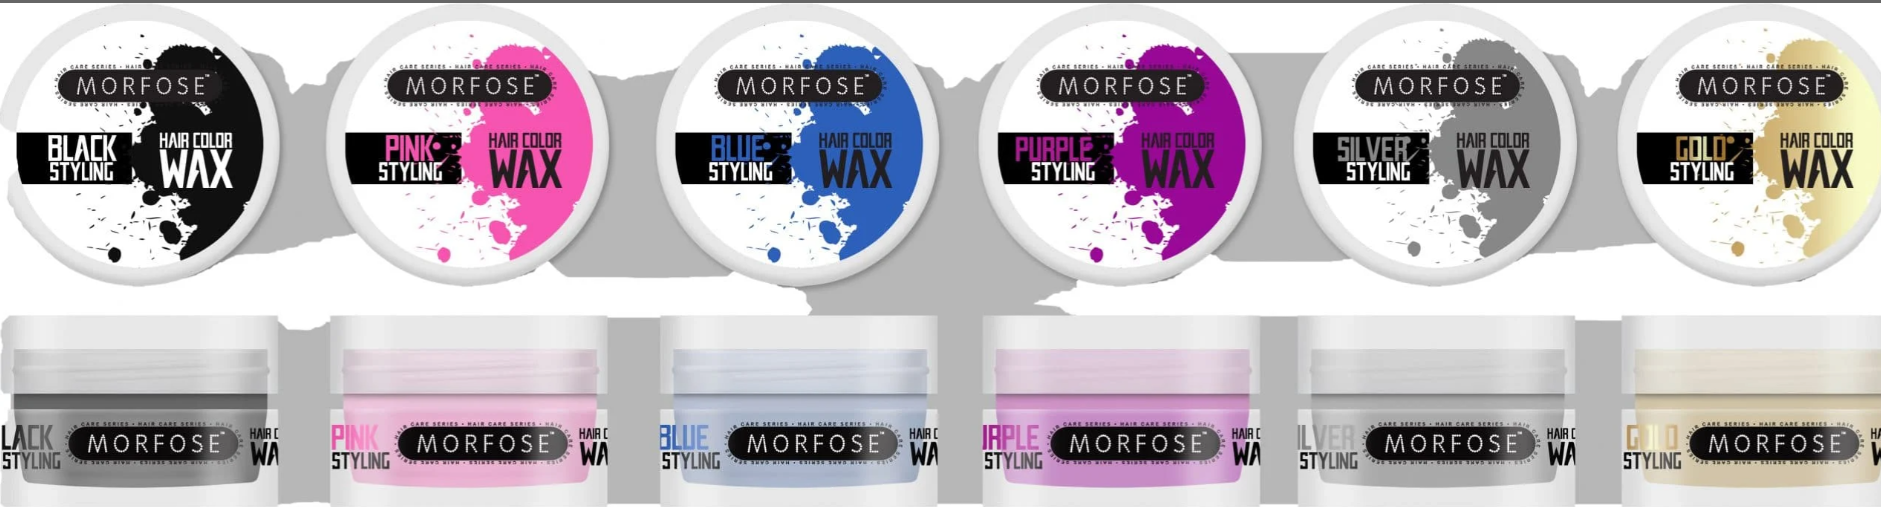 Morfose Hair Color Wax Kleur wax